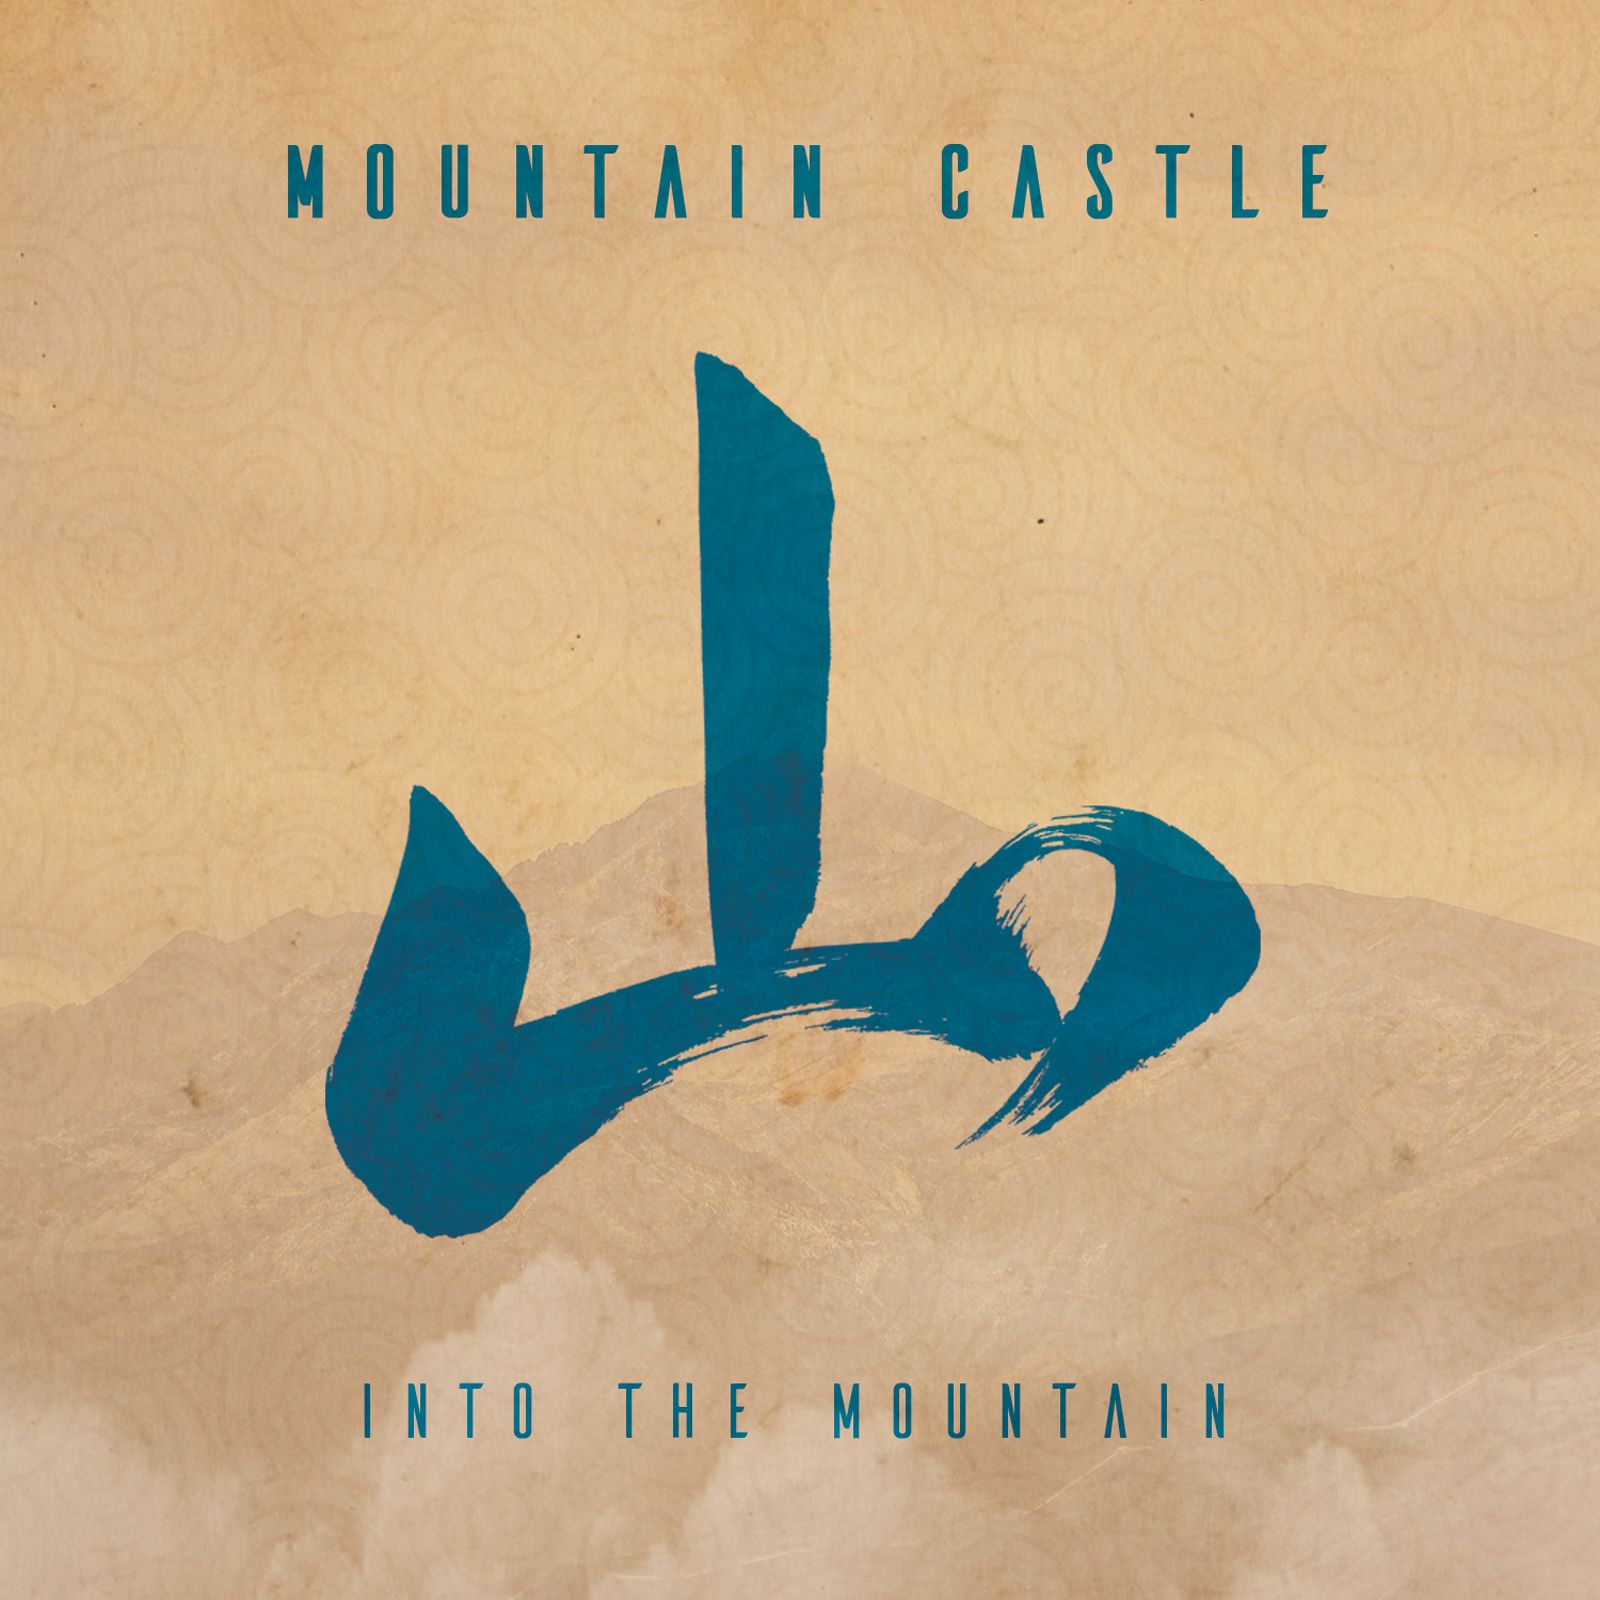 Mountain Castle Band